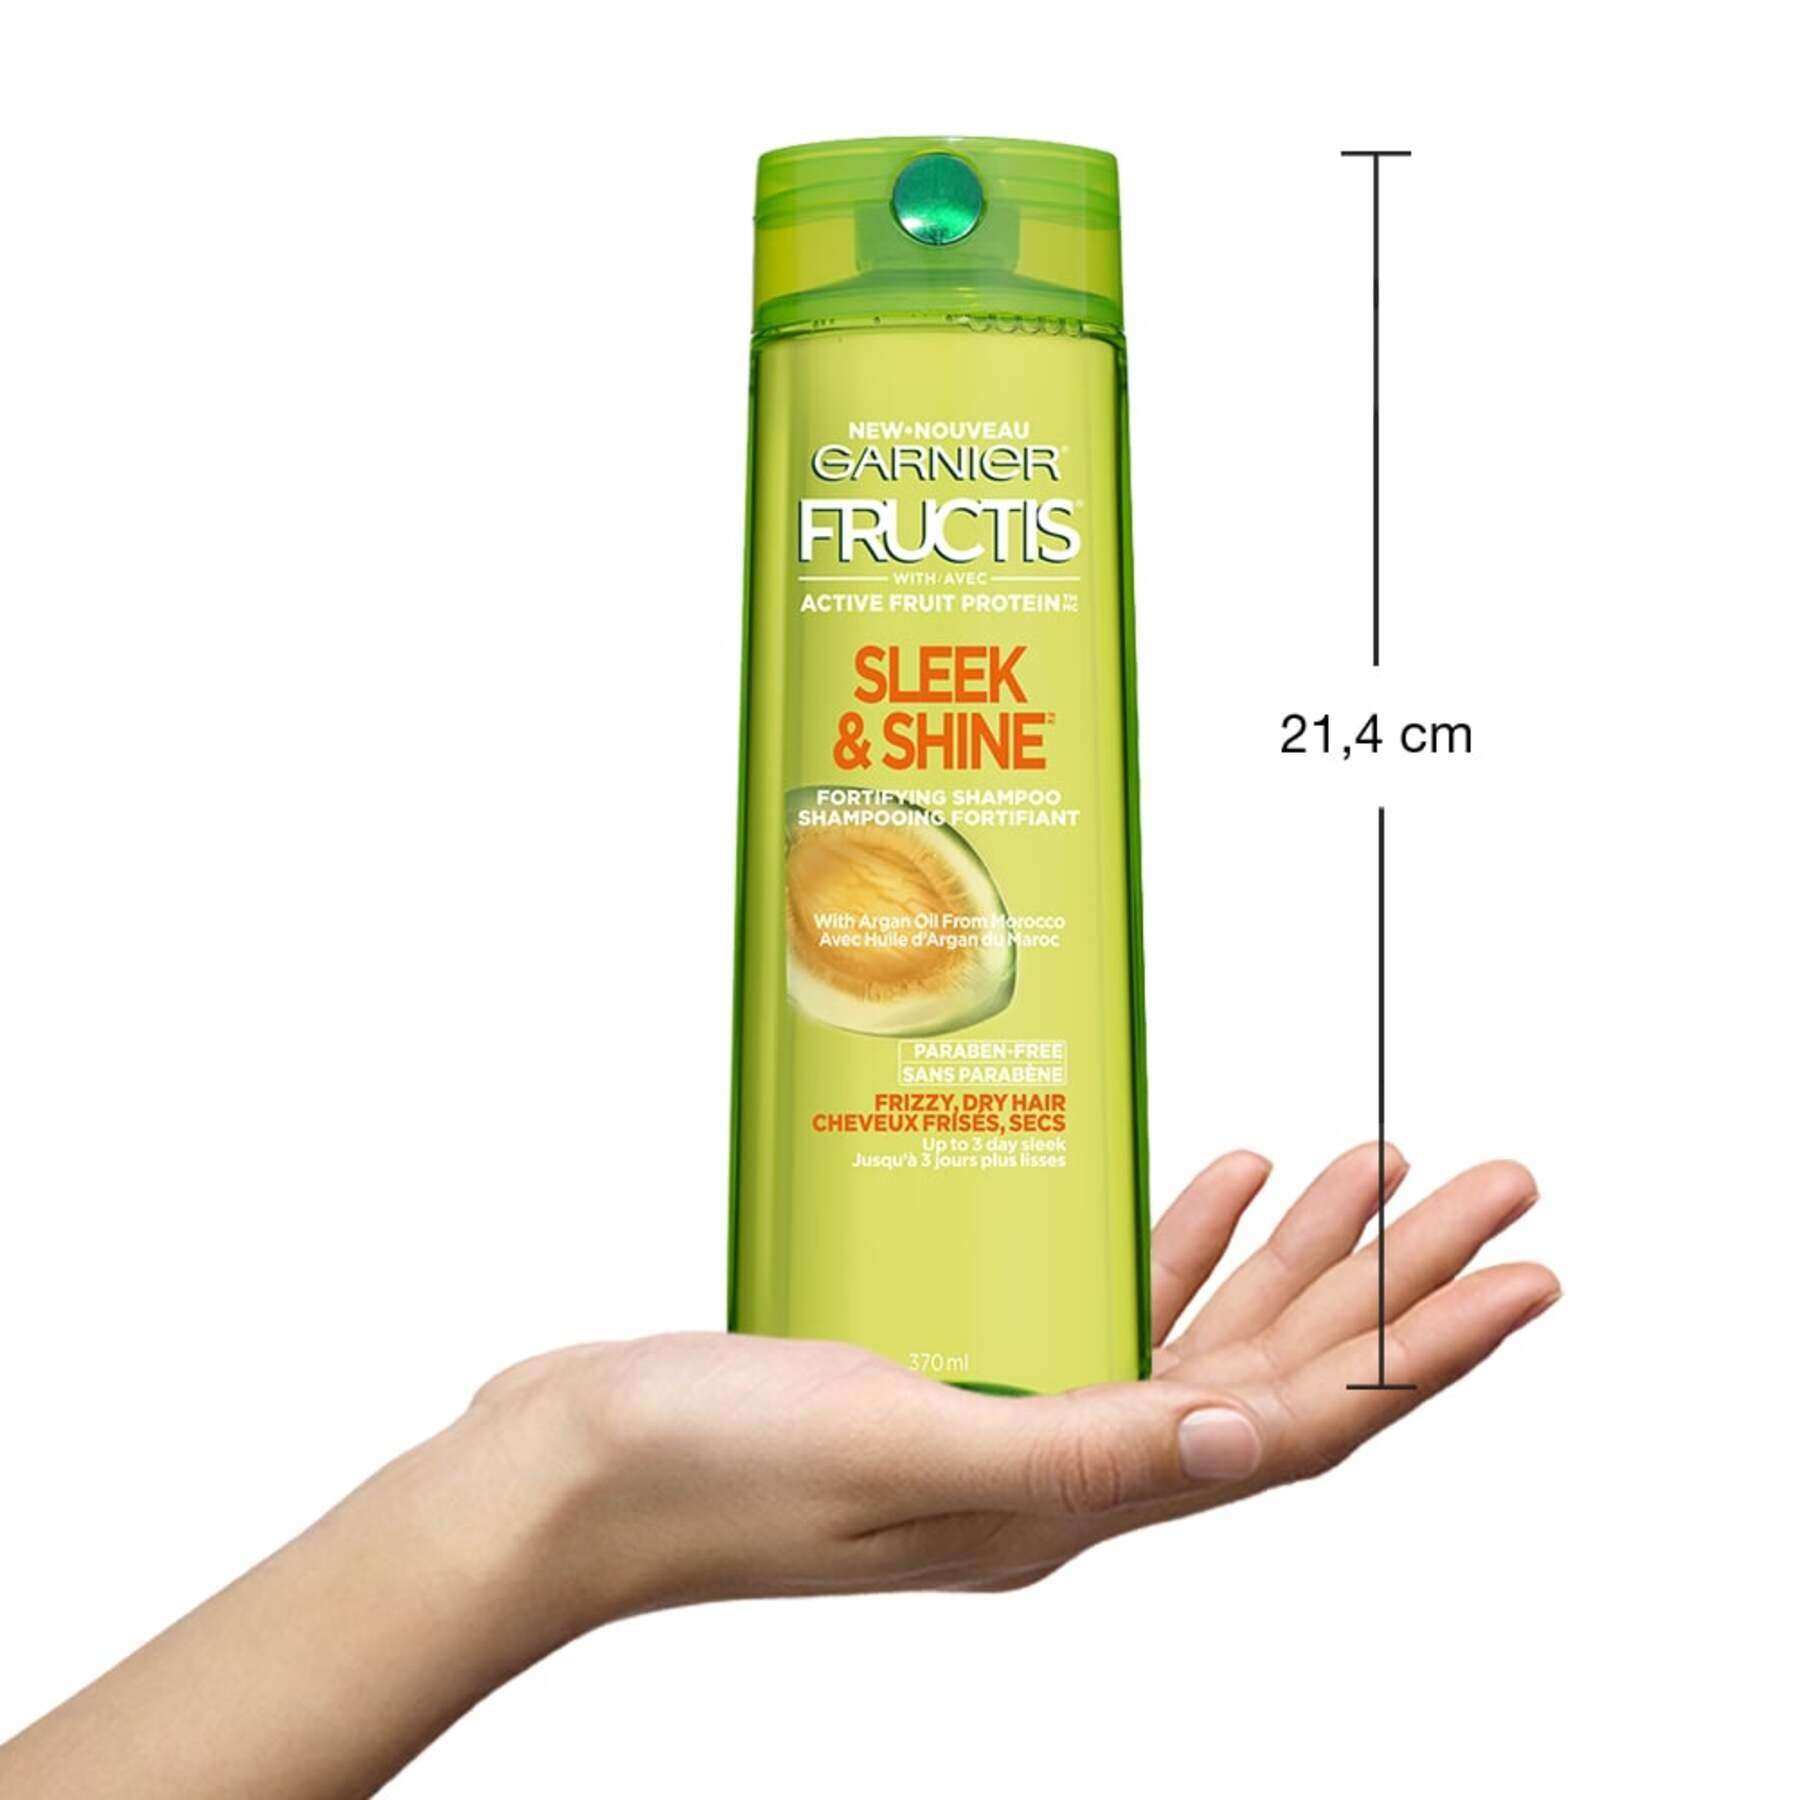 garnier shampoo fructis sleek shine fortifying shampoo 370 ml 603084491254 inhand